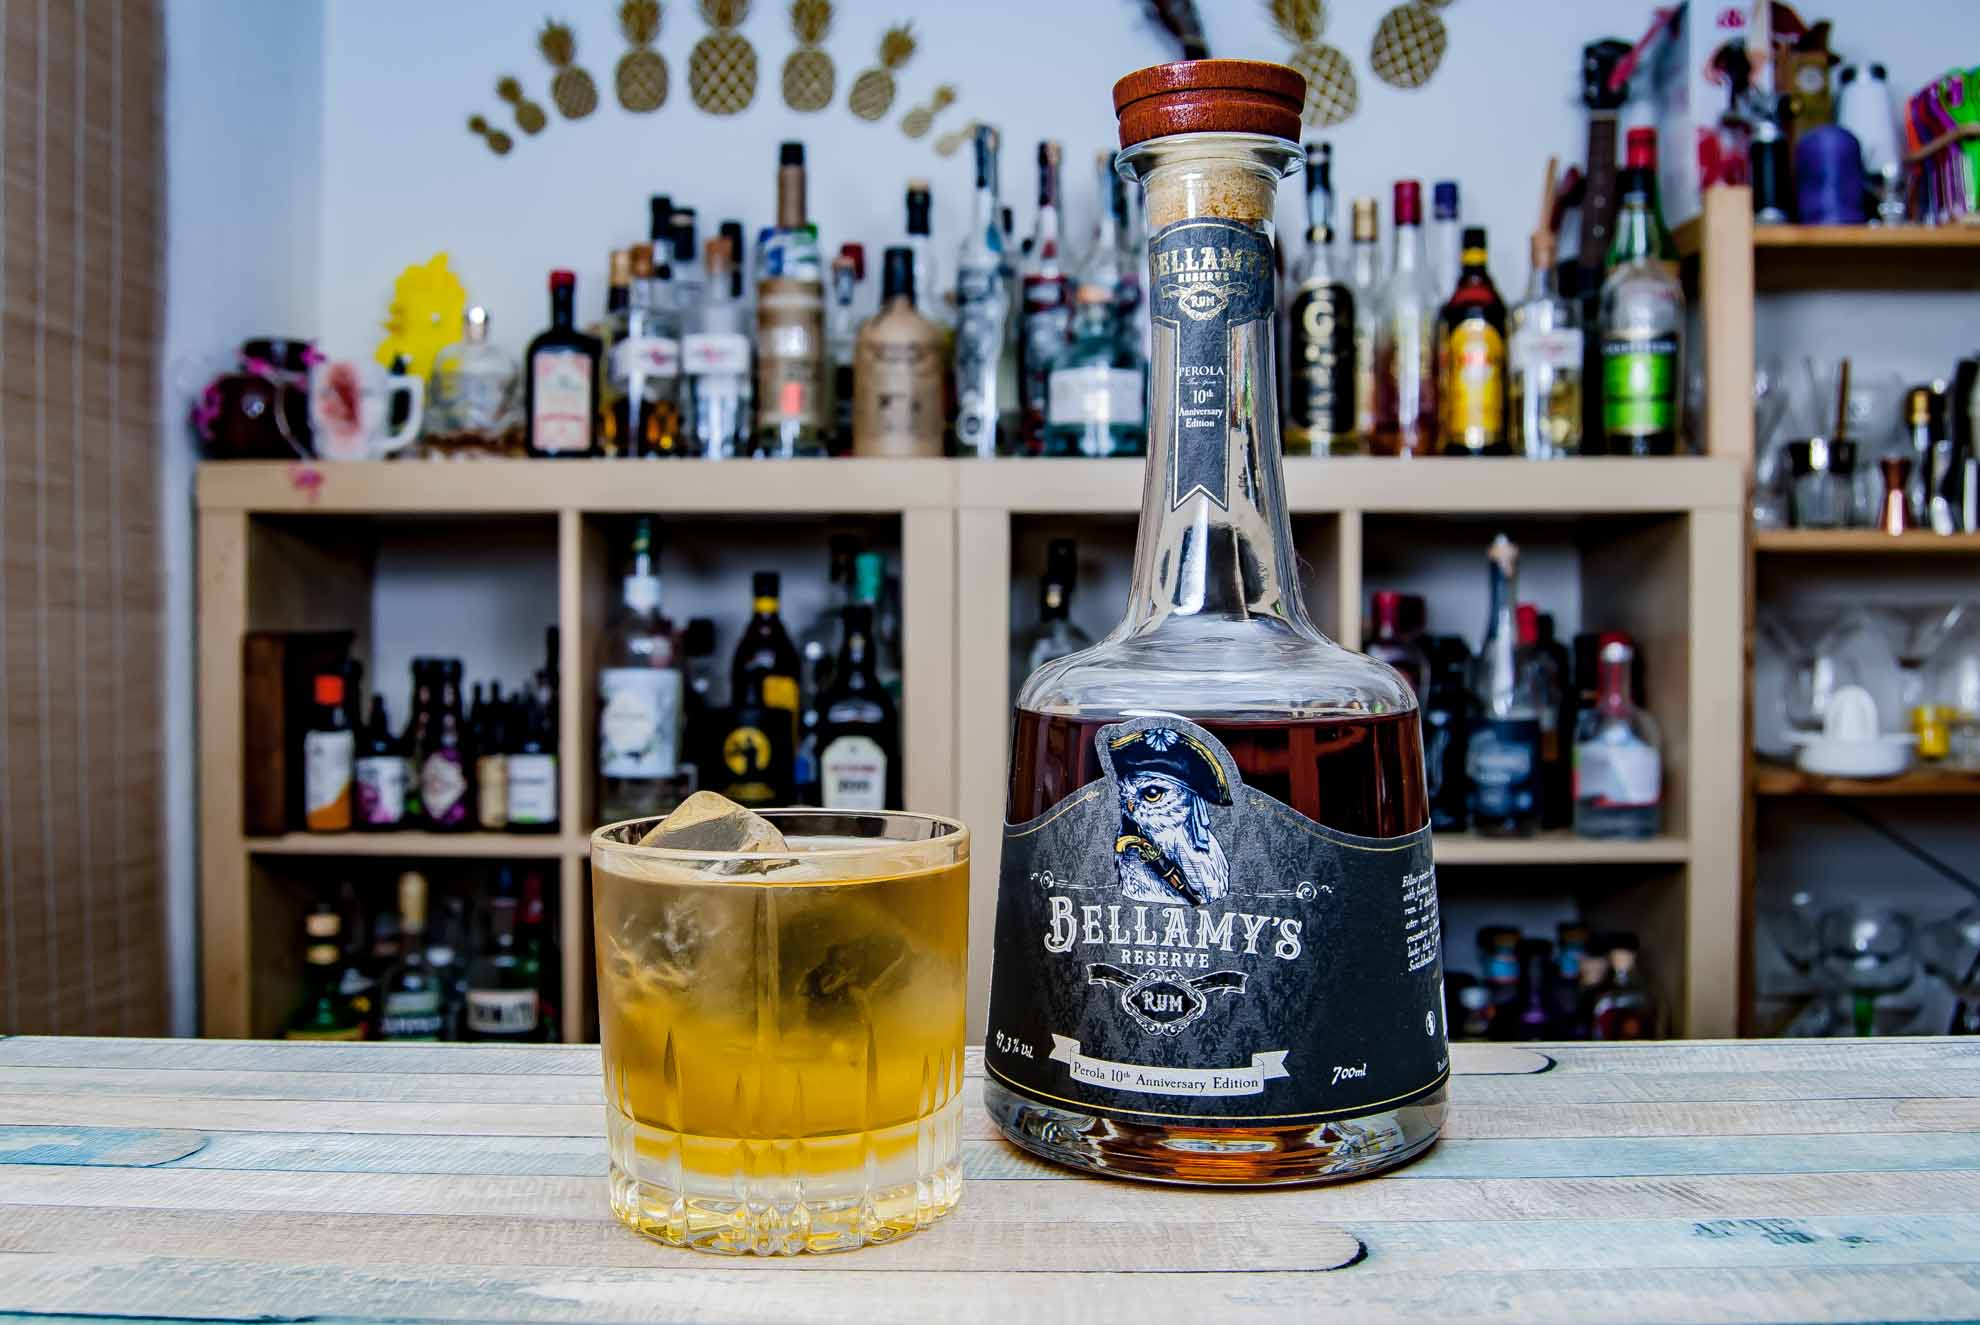 Bellamy’s Reserve Rum Perola 10th Anniversary Edition im Pandemonium Cocktail.